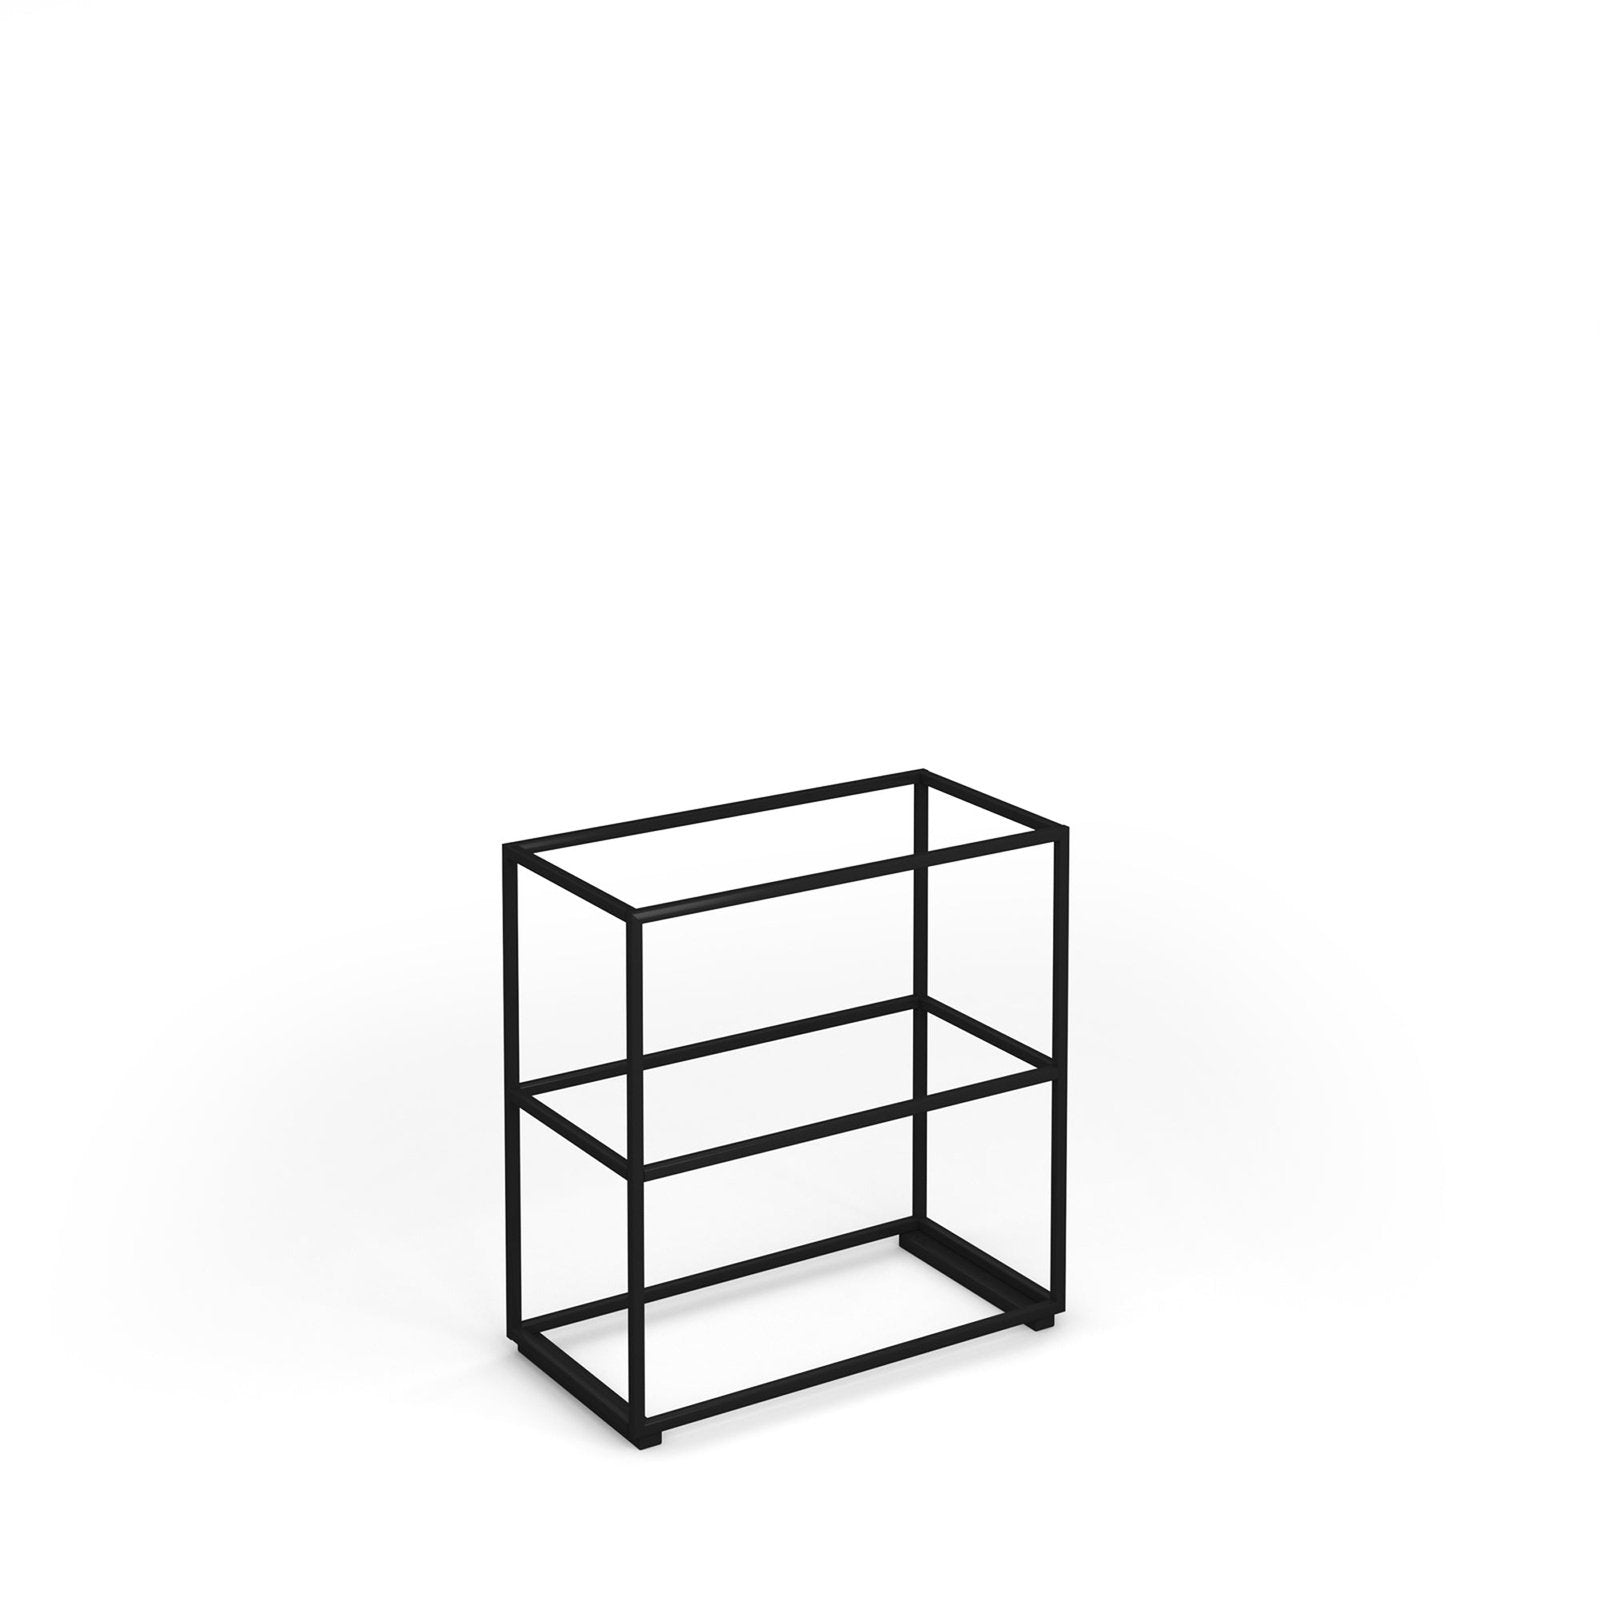 Flux modular storage unit - Office Products Online